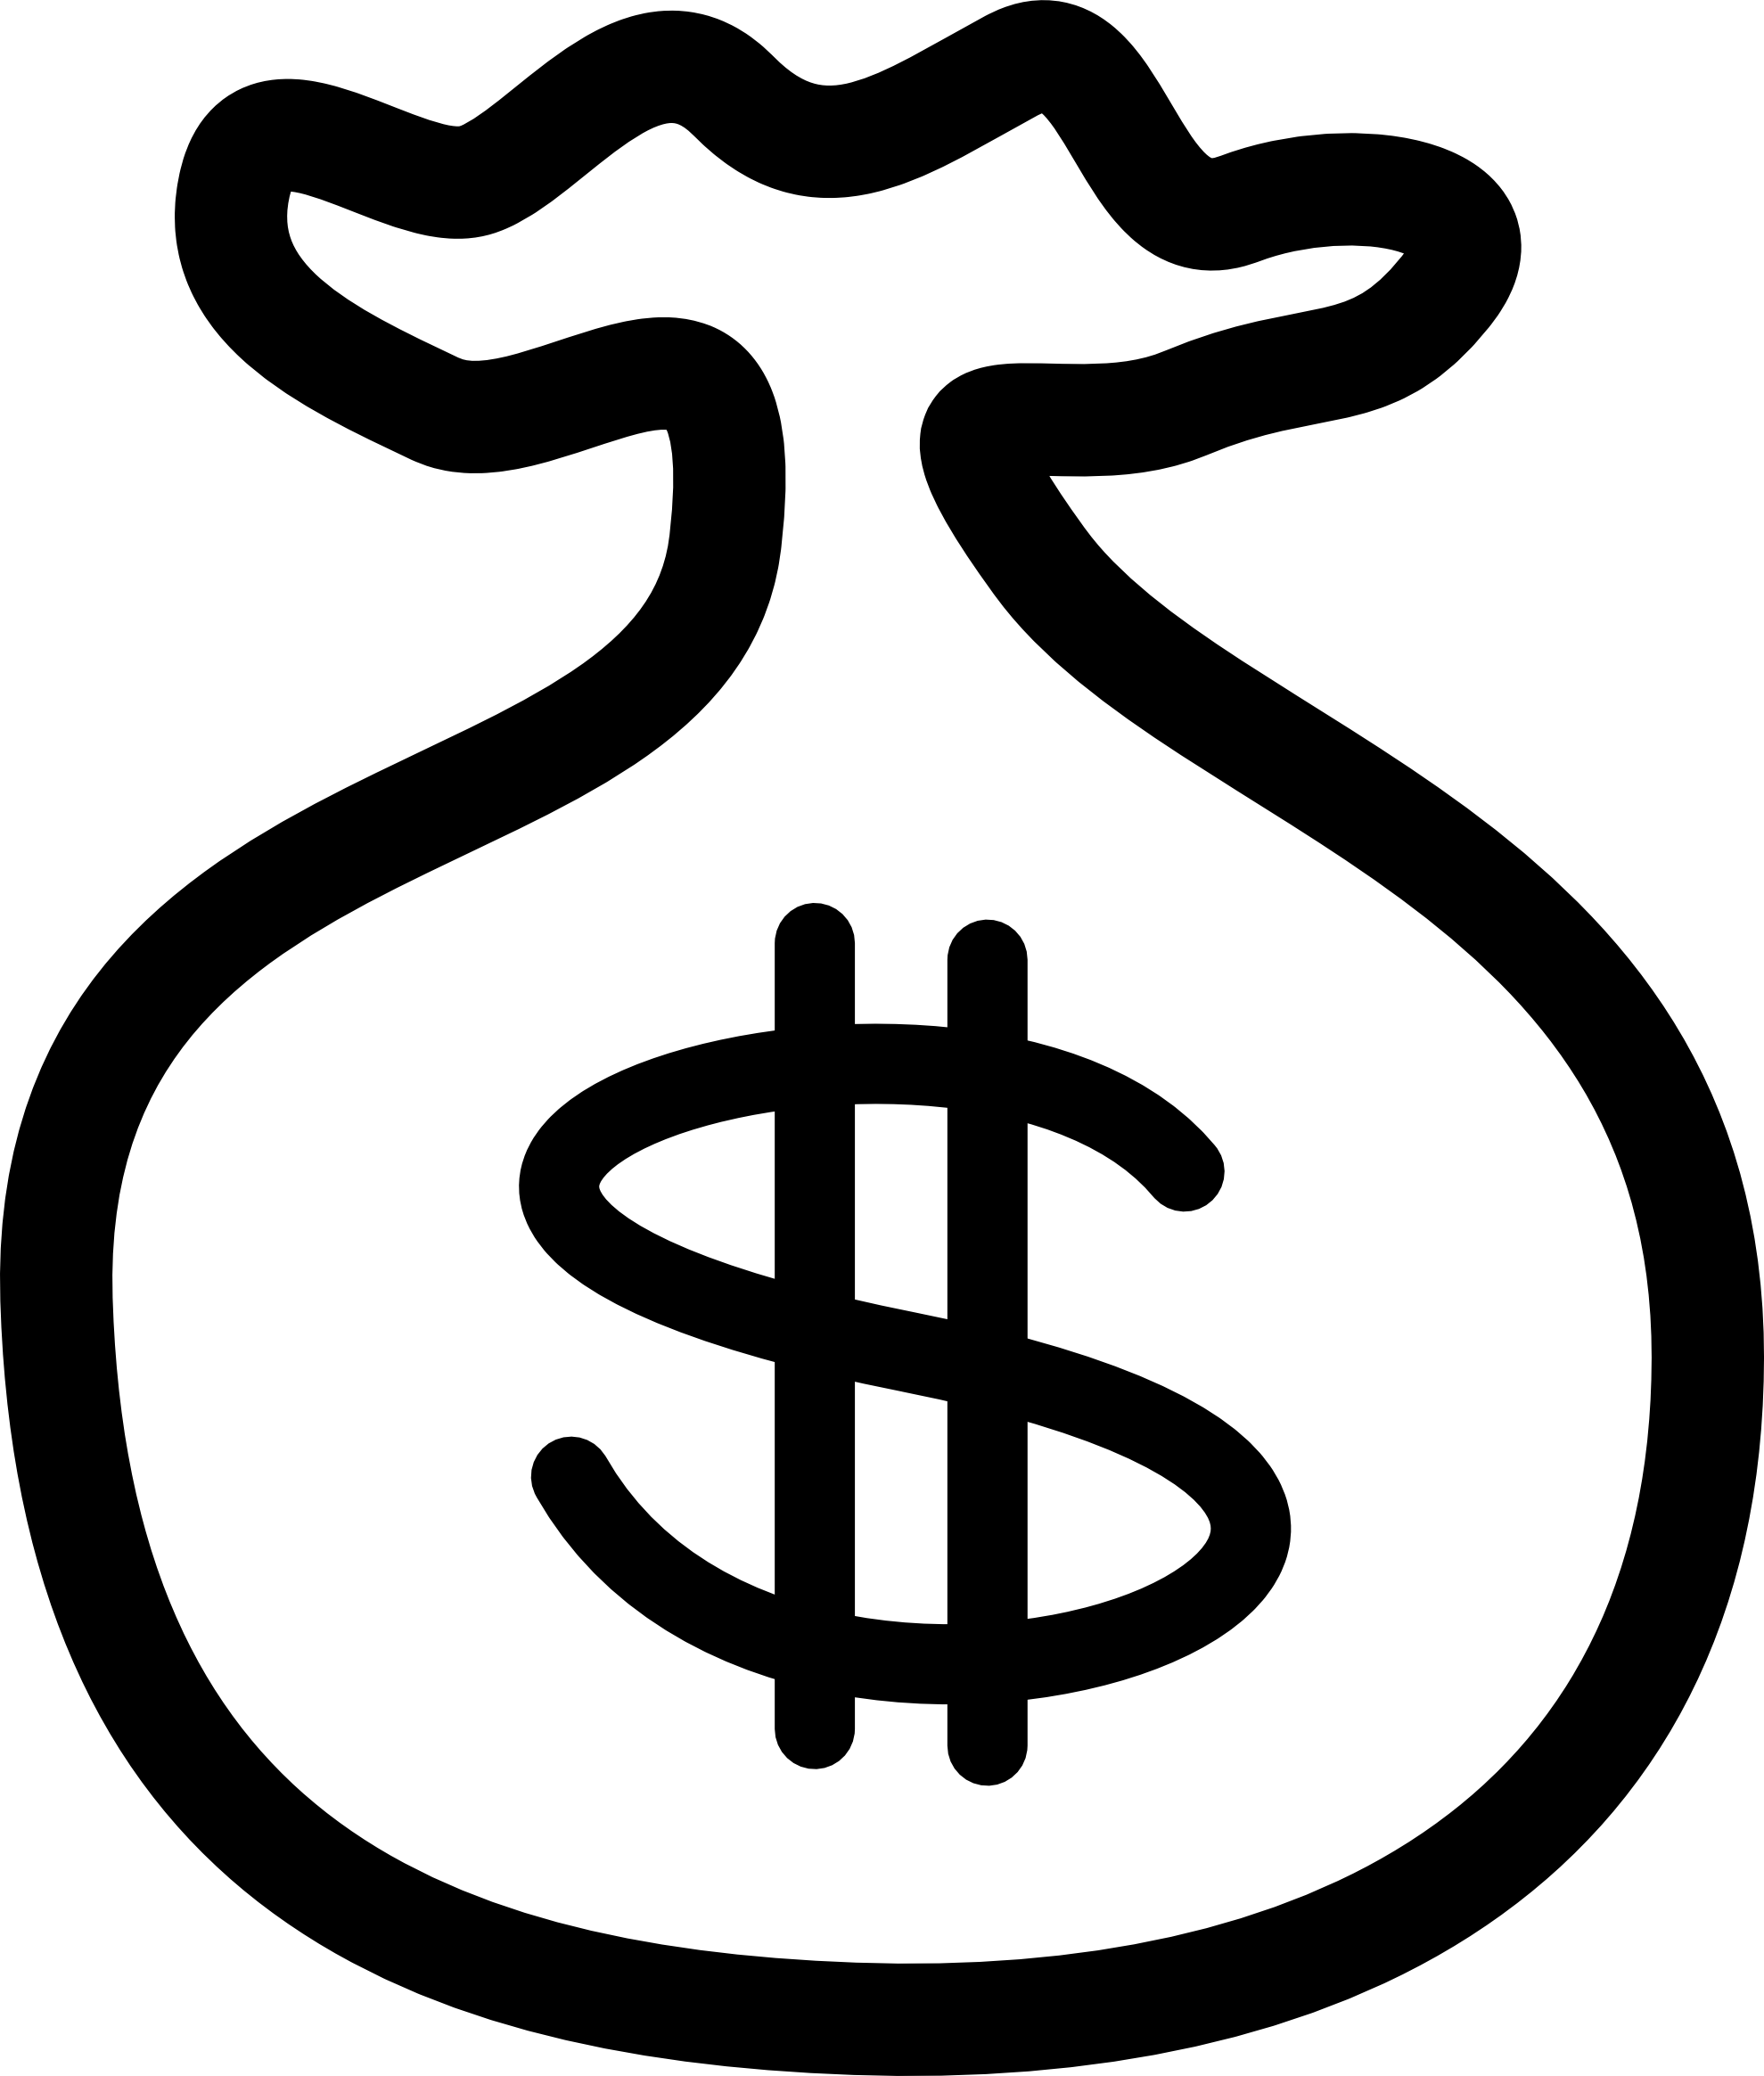 Money Bag Clip Art Black And White | Clipart Panda - Free Clipart ...